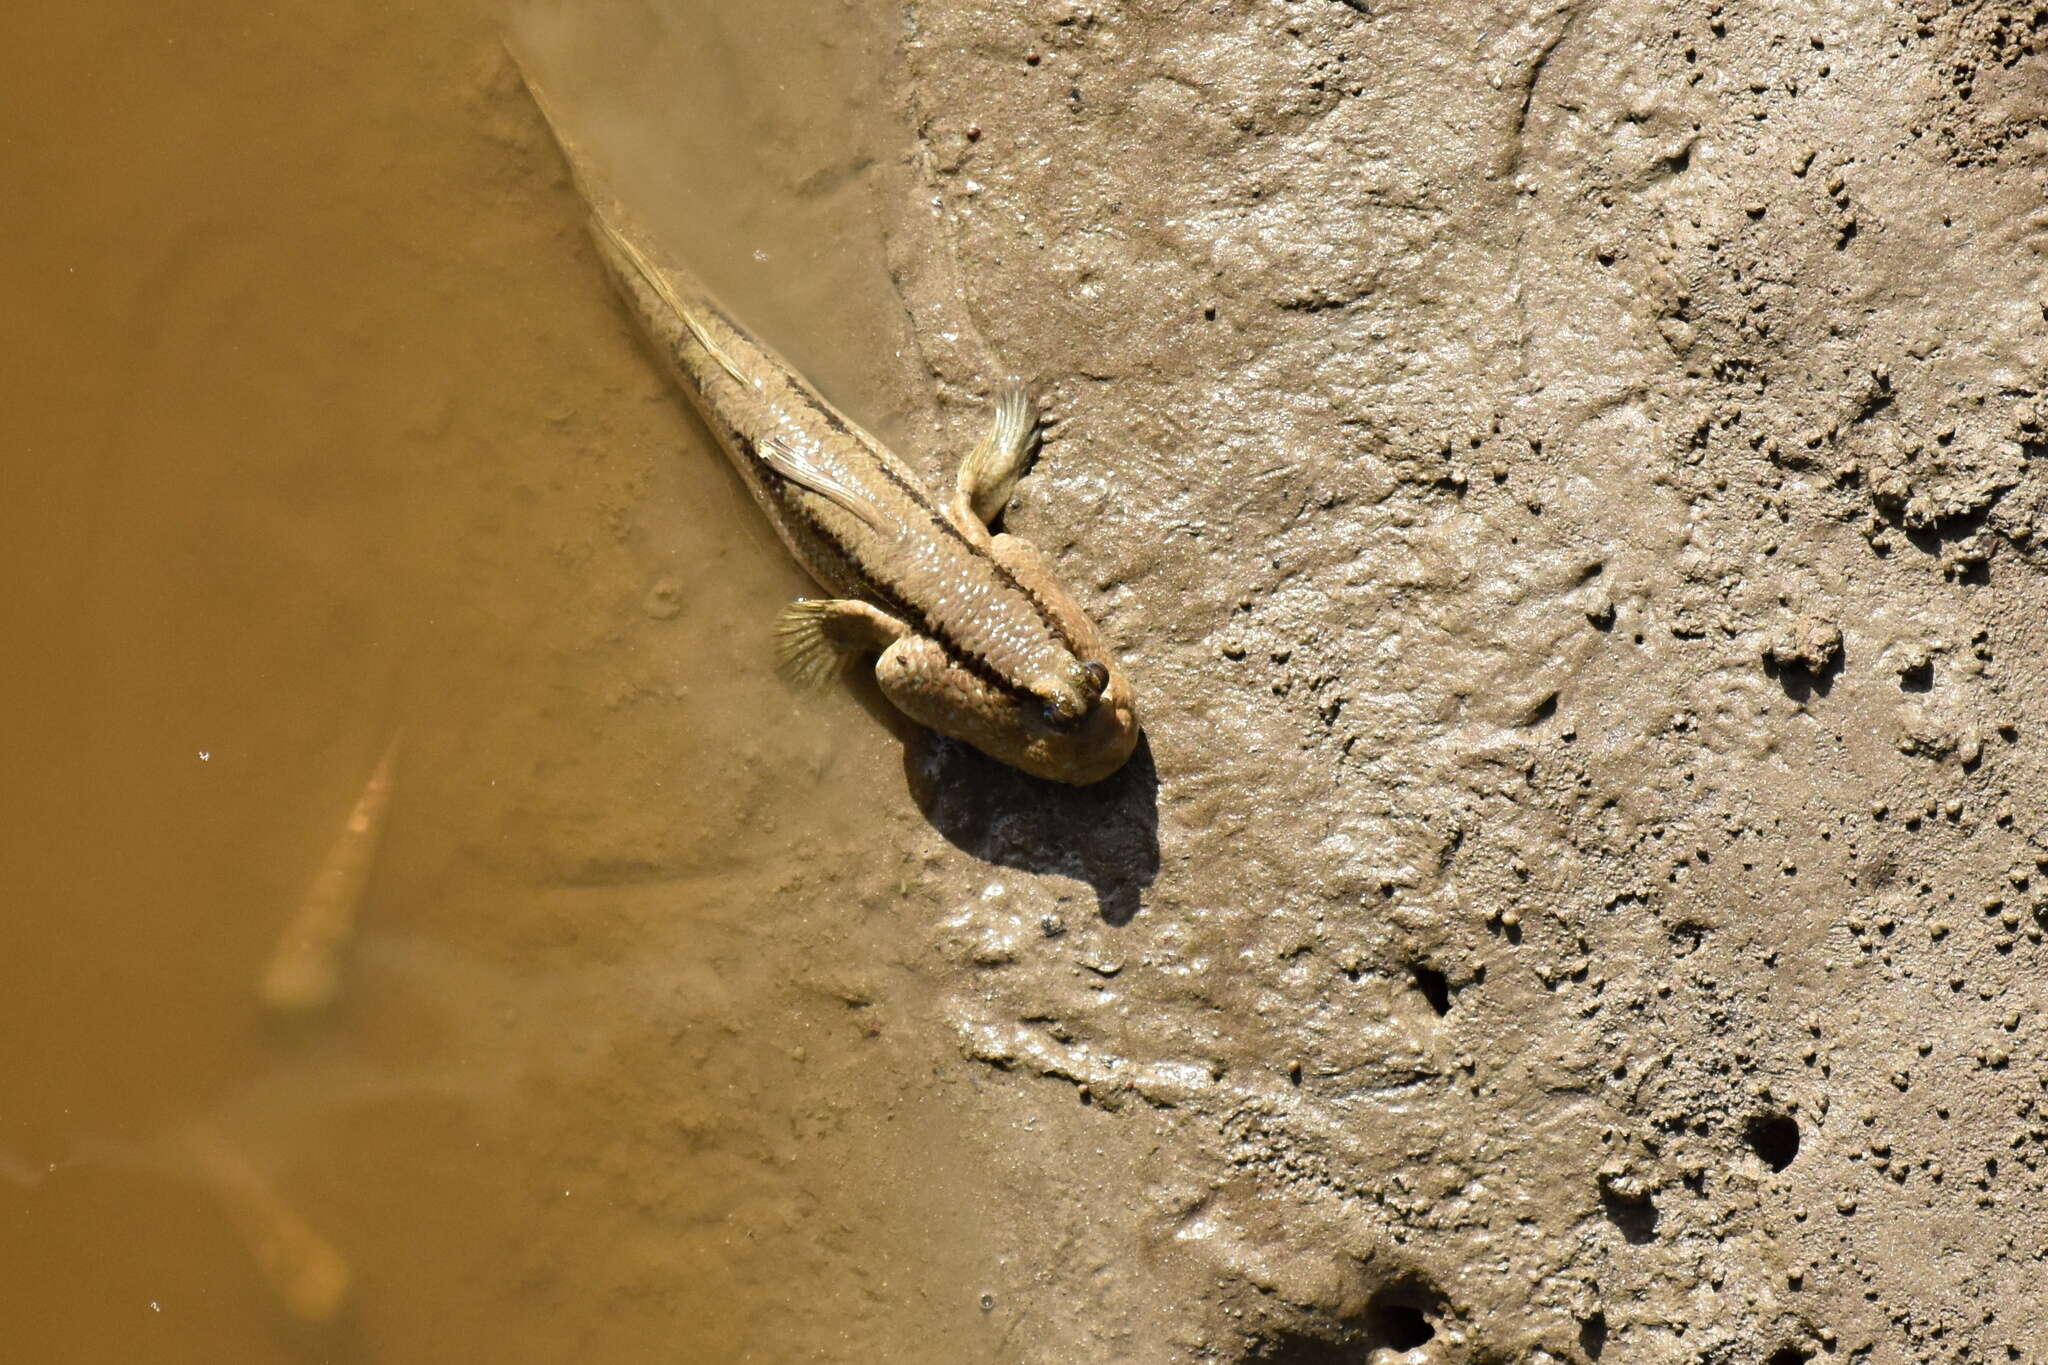 Image of Giant mudskipper